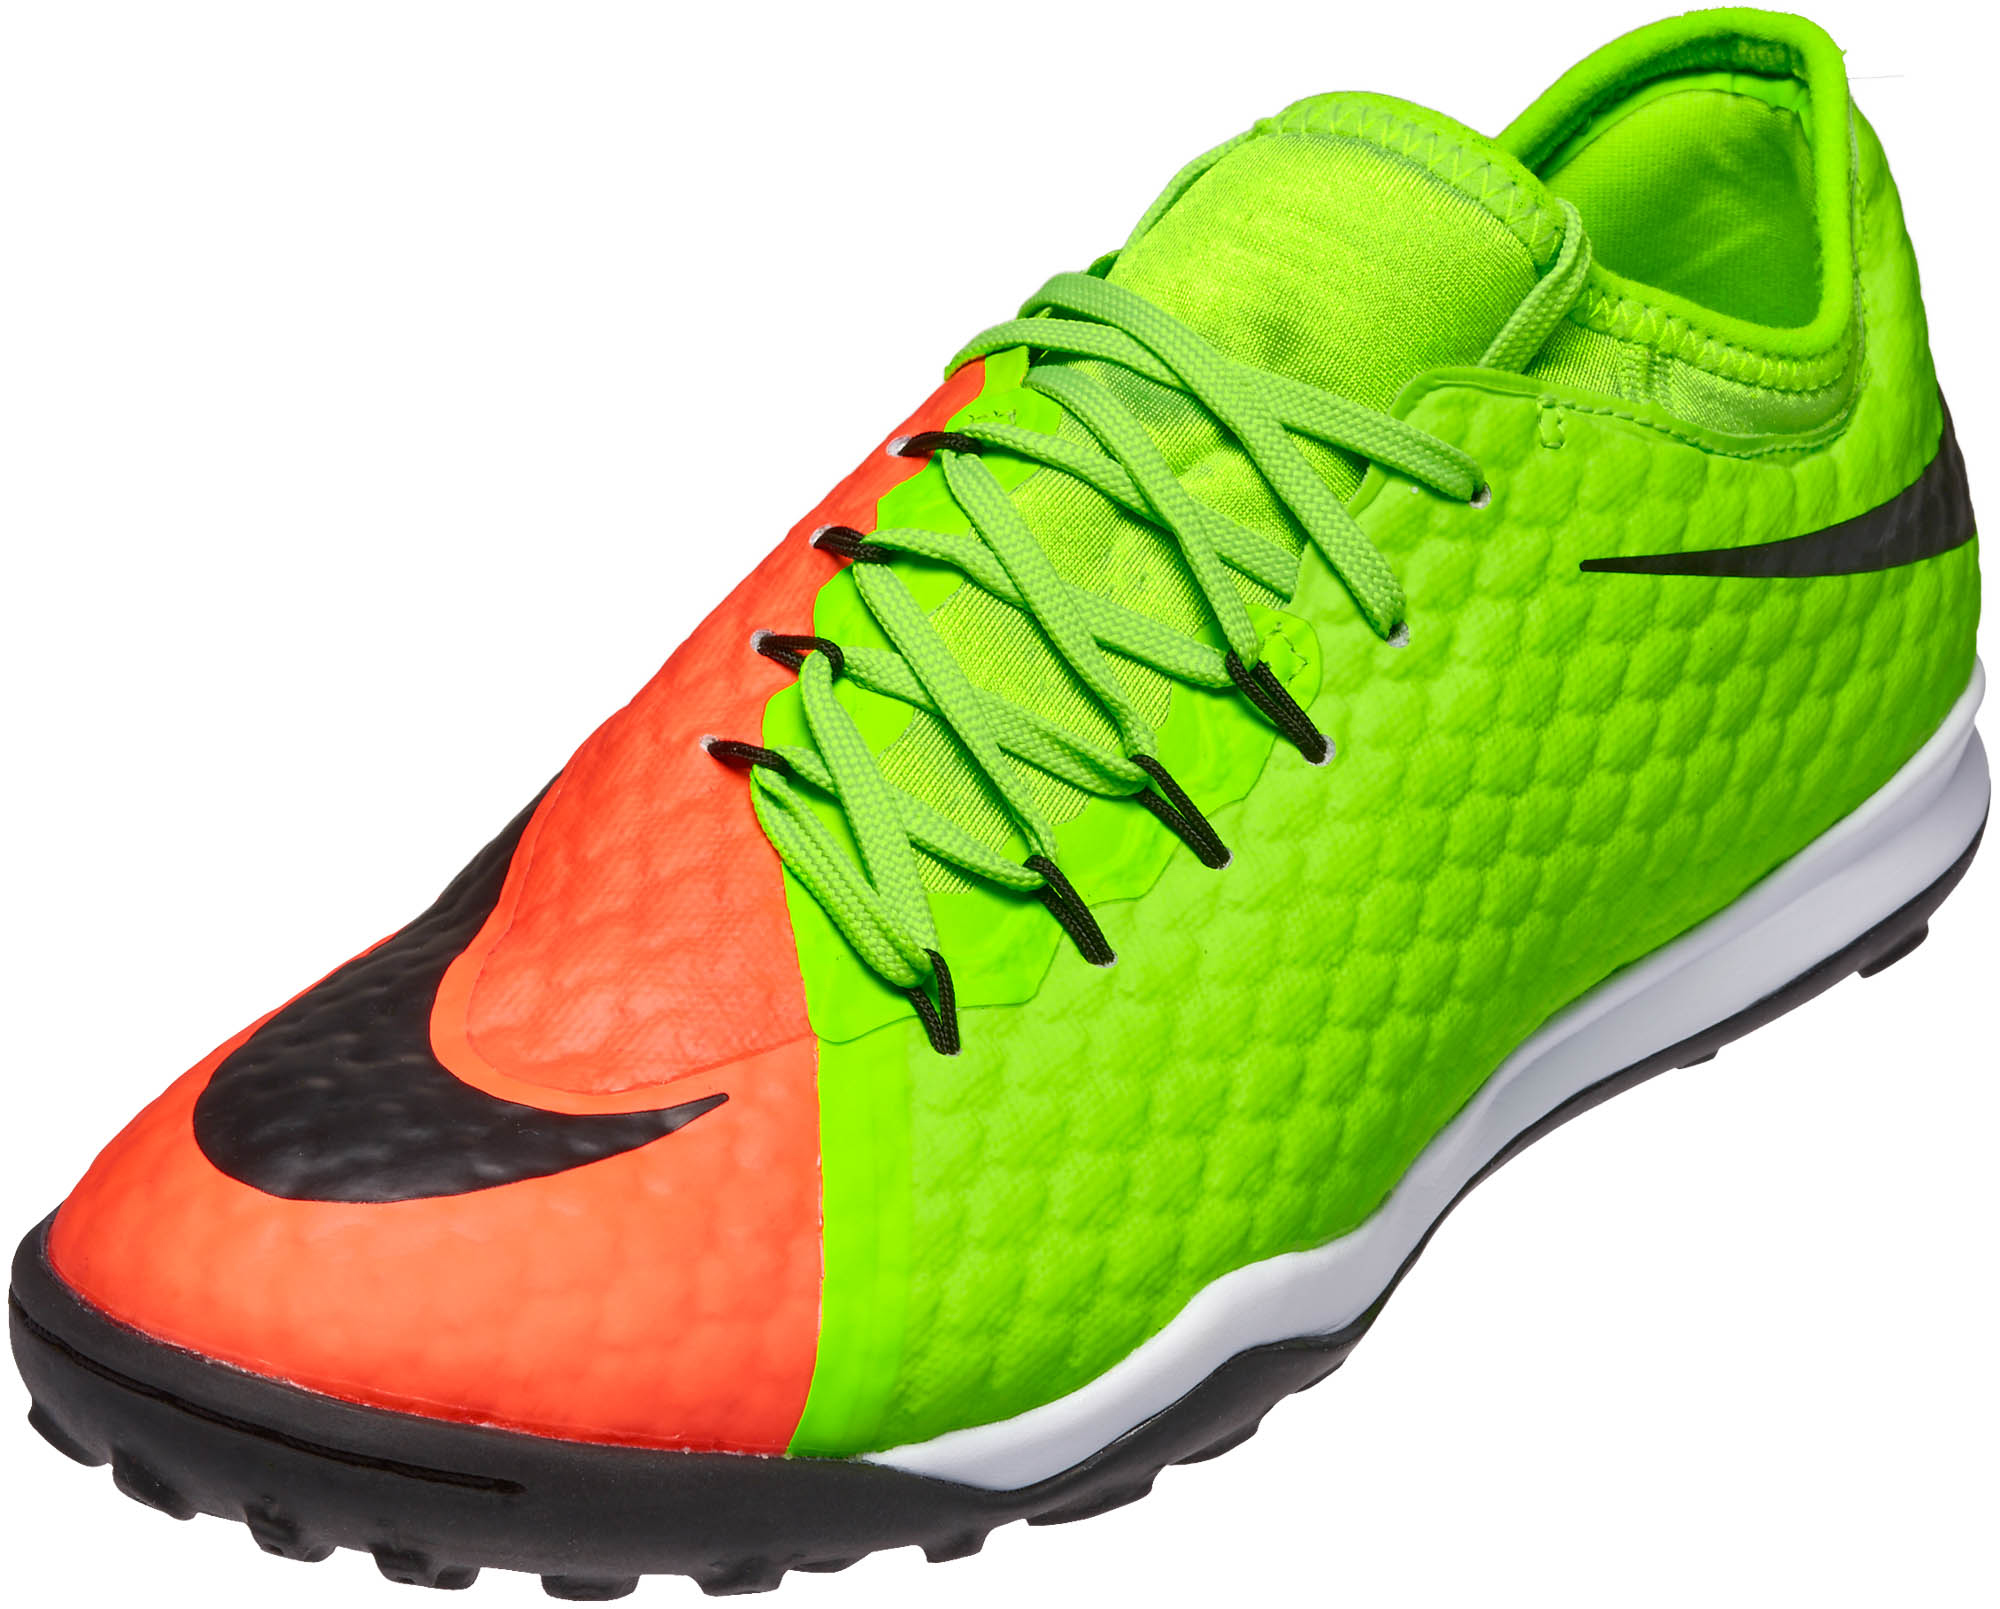 Nike Finale II Turf Soccer Shoes - Green